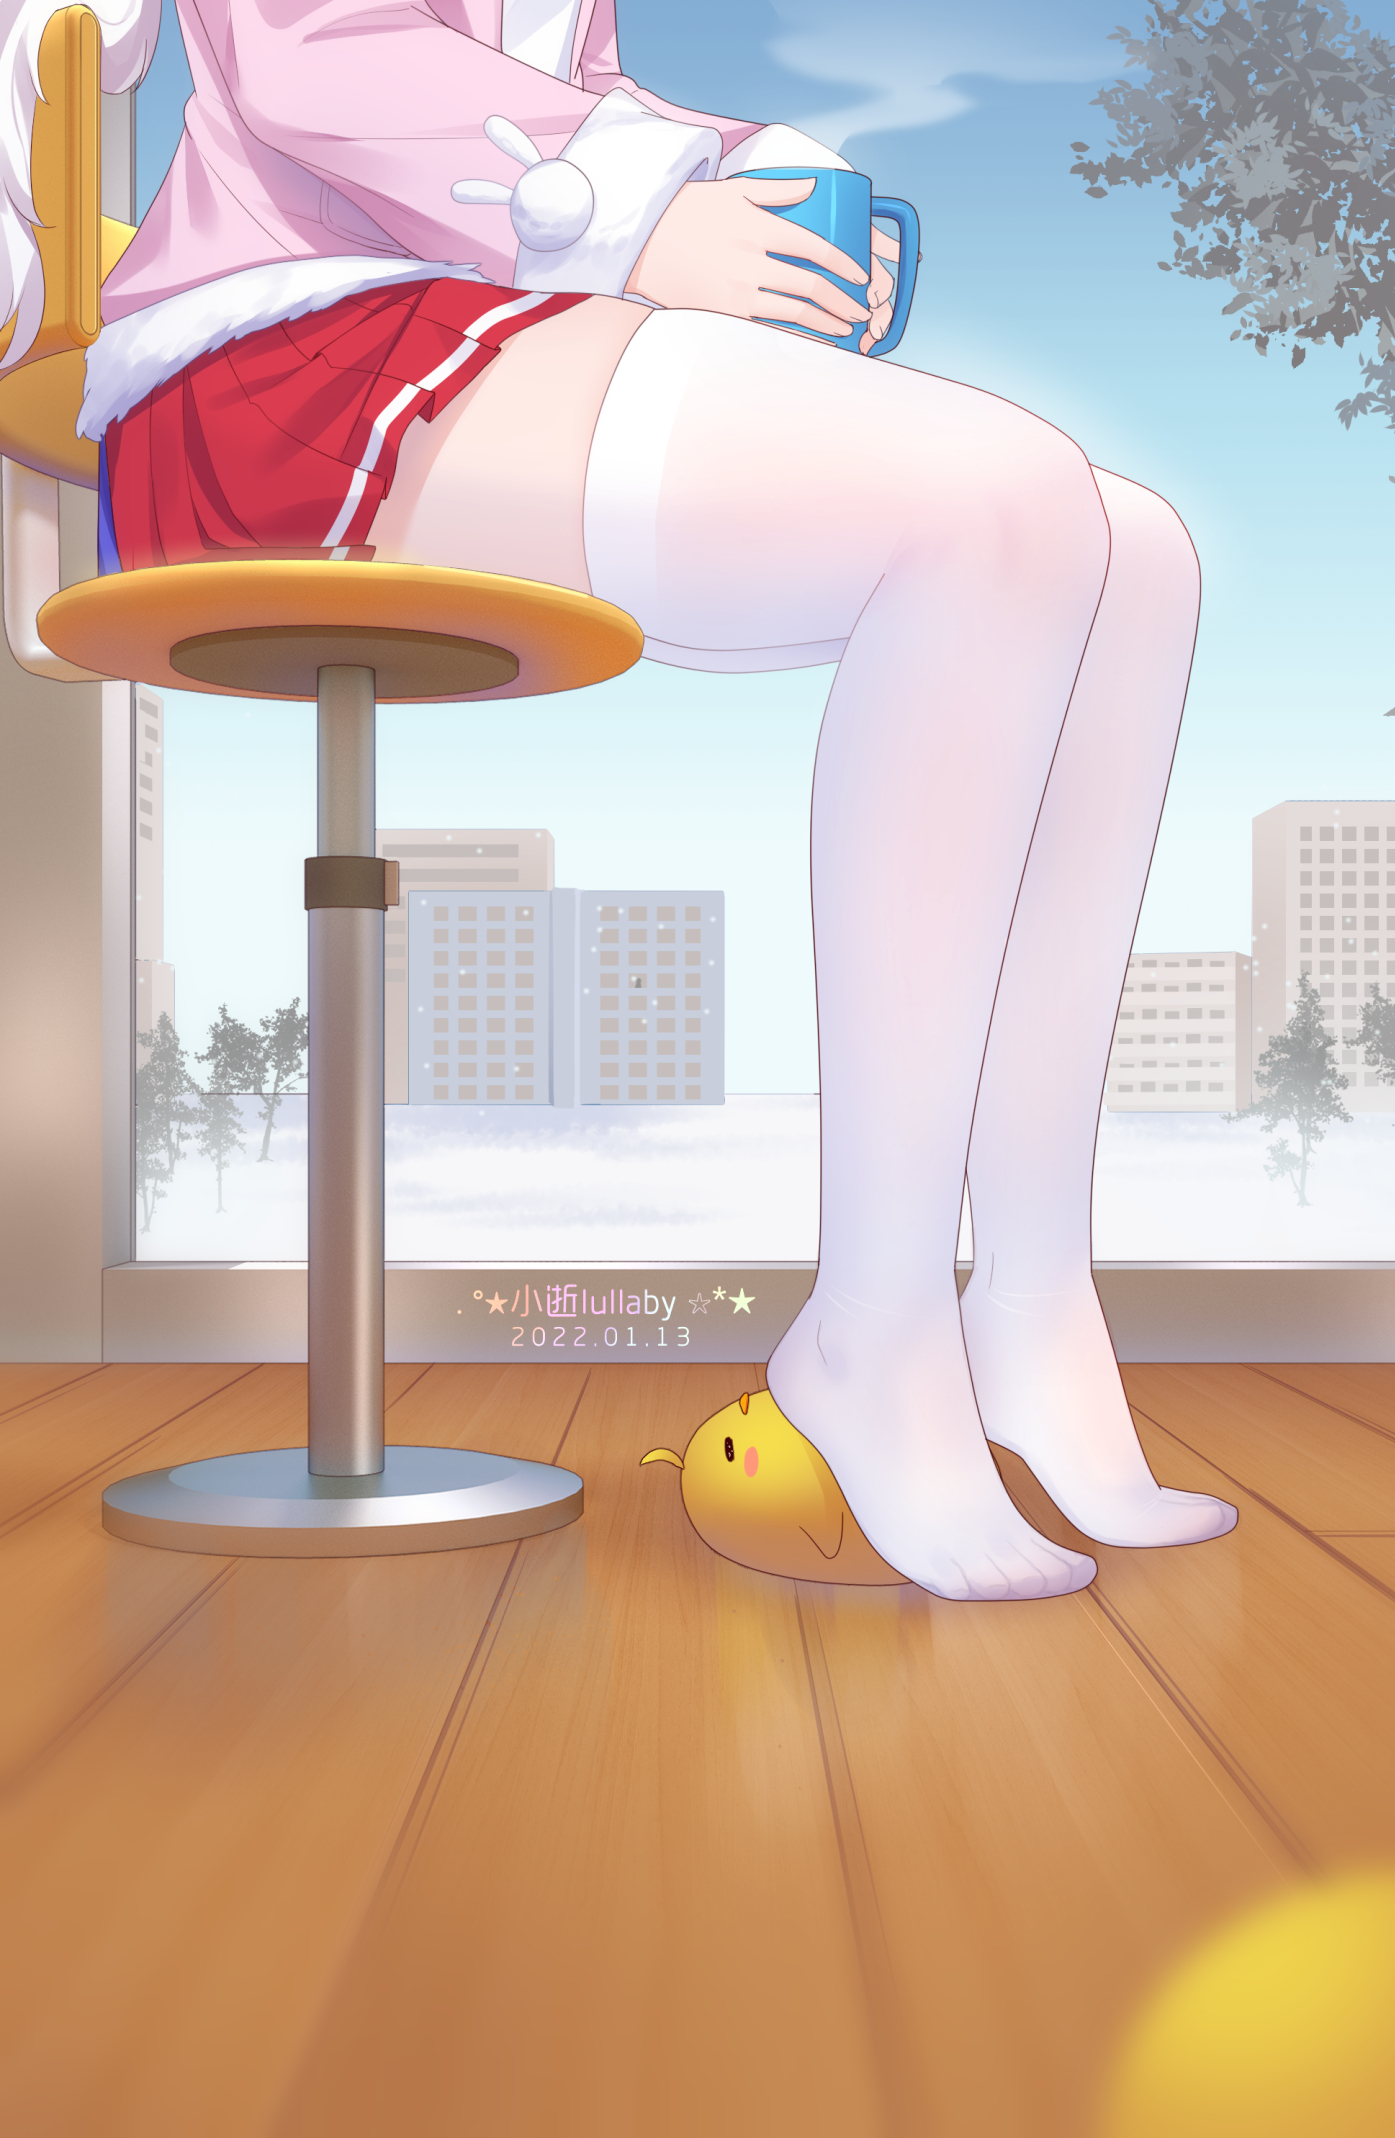 Anime 1395x2138 stockings anime girls foot fetishism feet portrait display drink chair Azur Lane Laffey (Azur Lane) text Pixiv